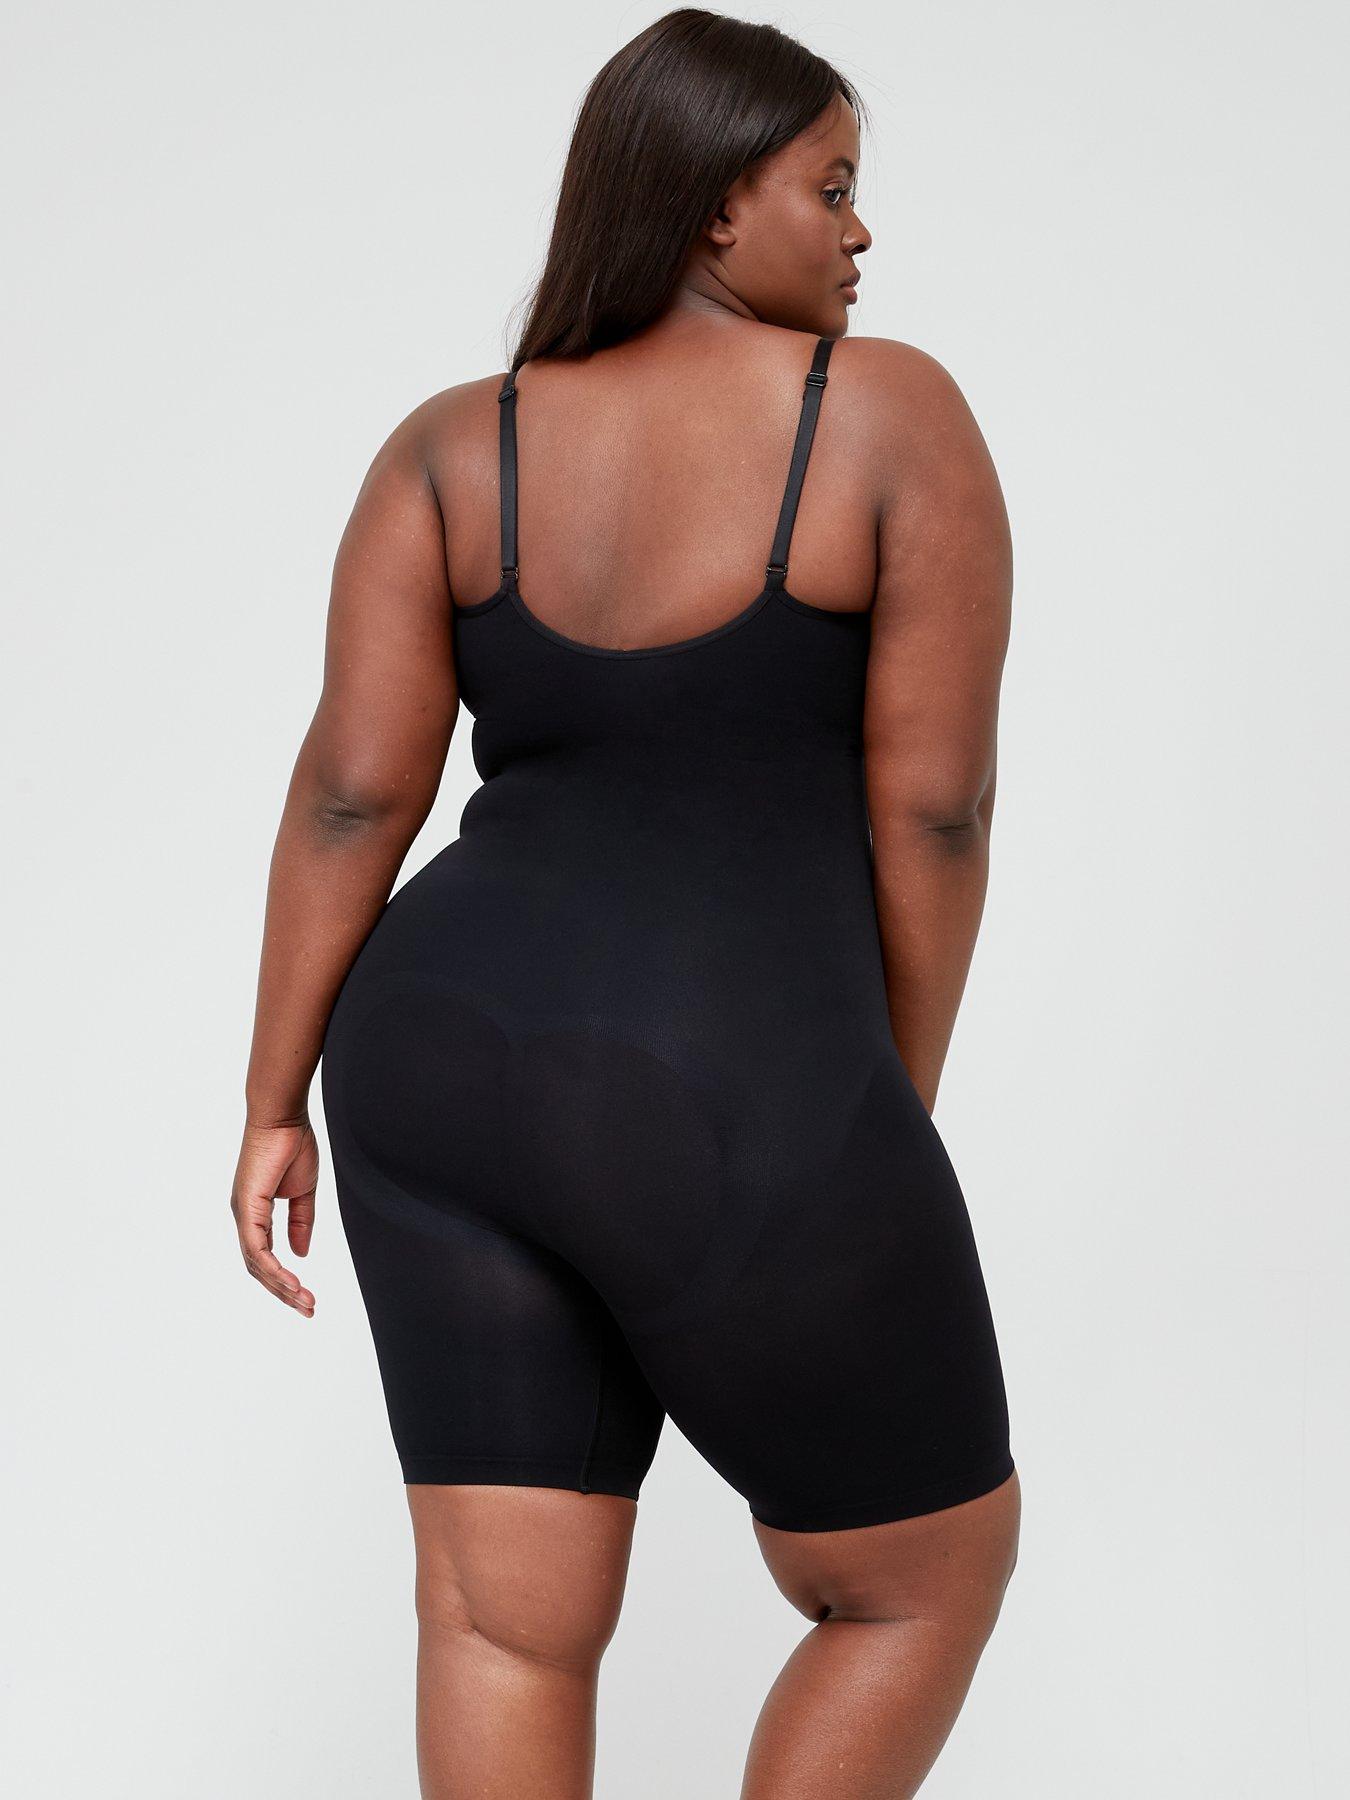 $149 Spanx Women's Black Suit Your Fancy Mid Thigh Bodysuit Shapewear Size  Small